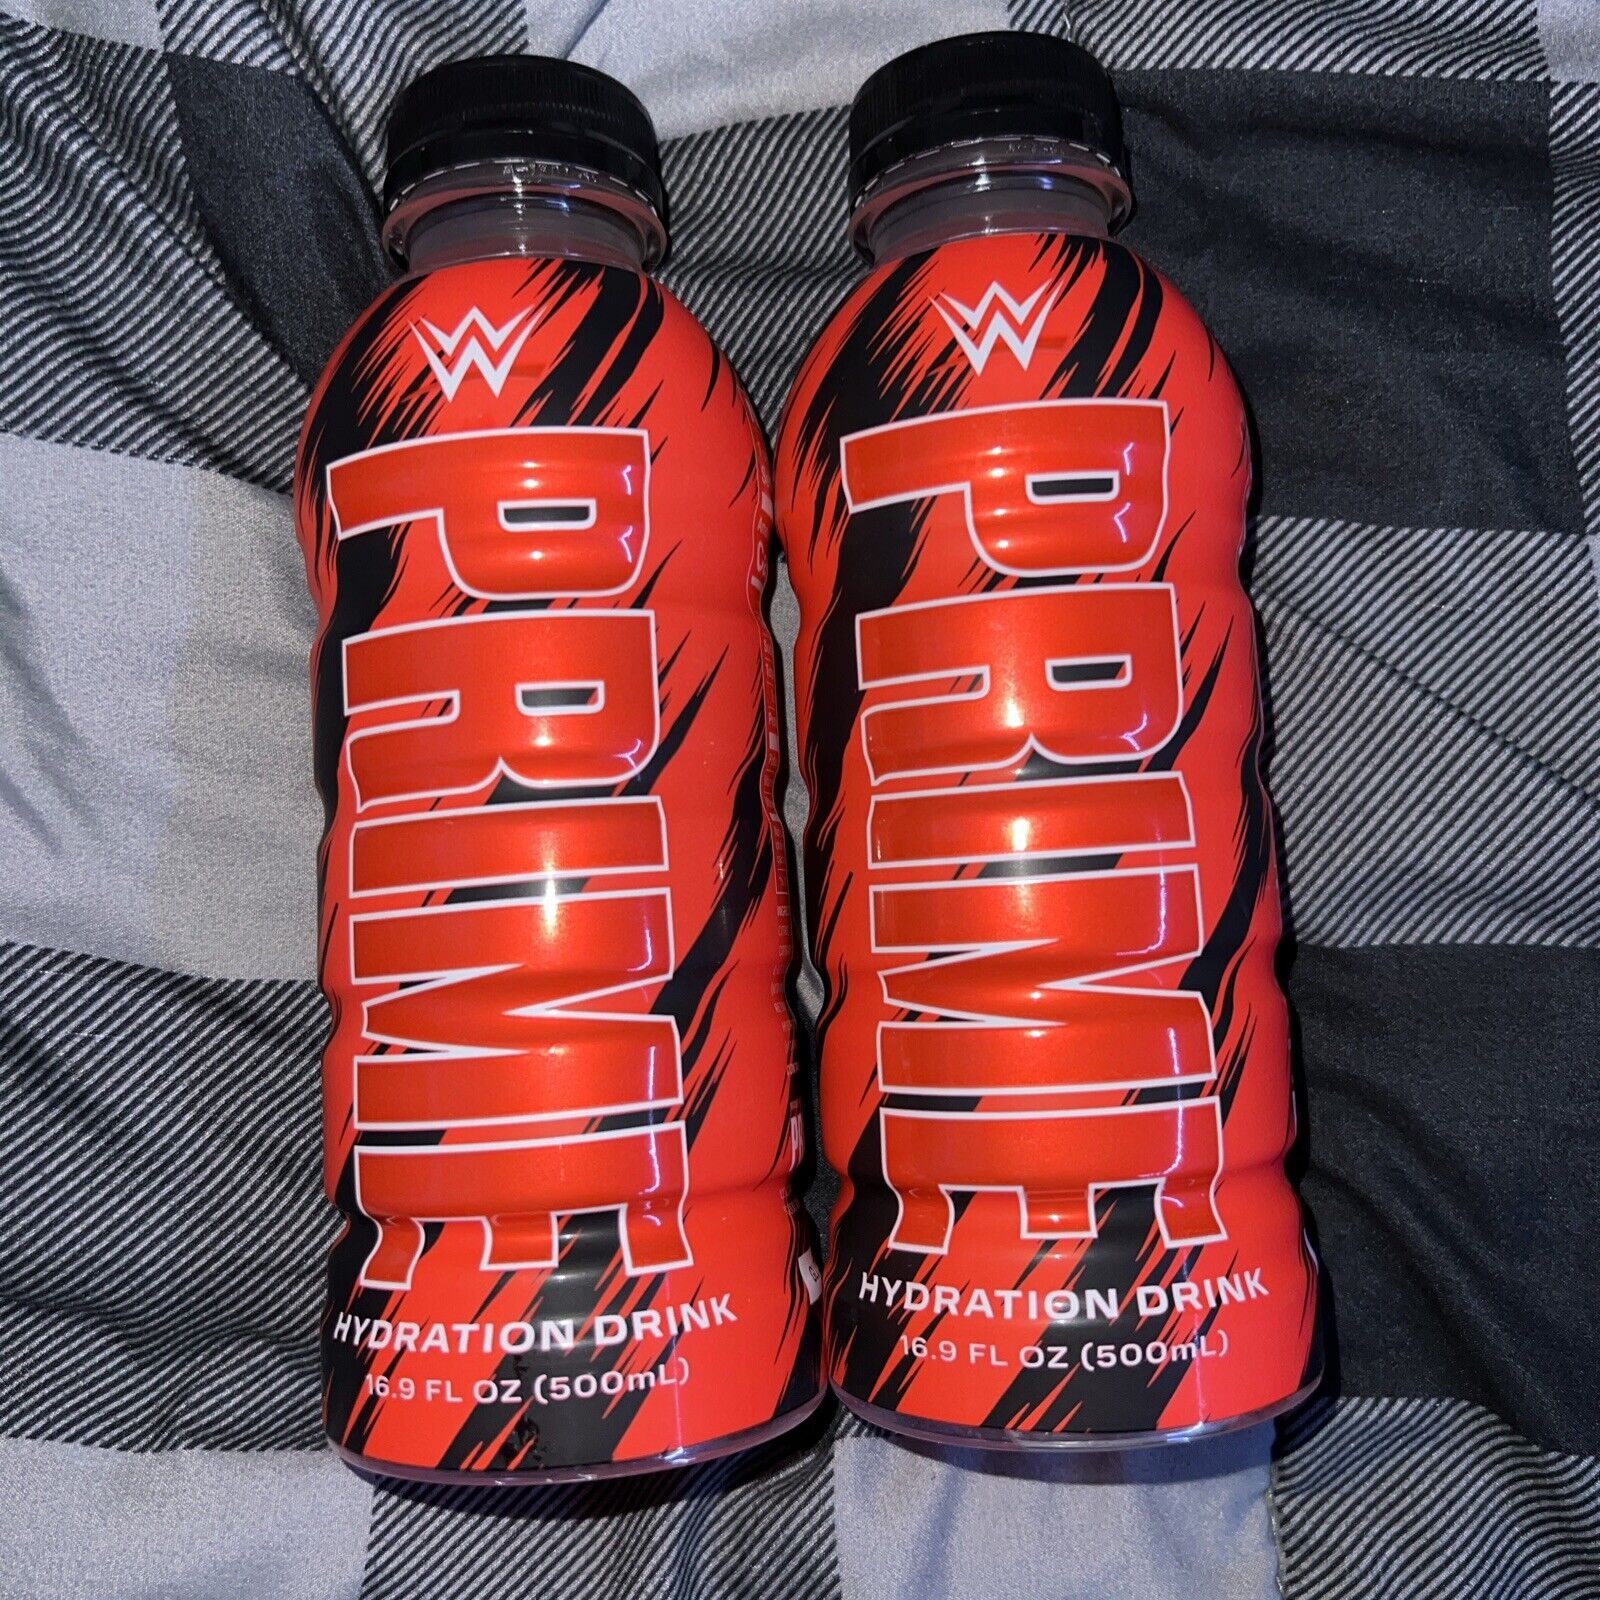 Prime Hydration WWE Bottle Unopened/Brand New (2 PK)